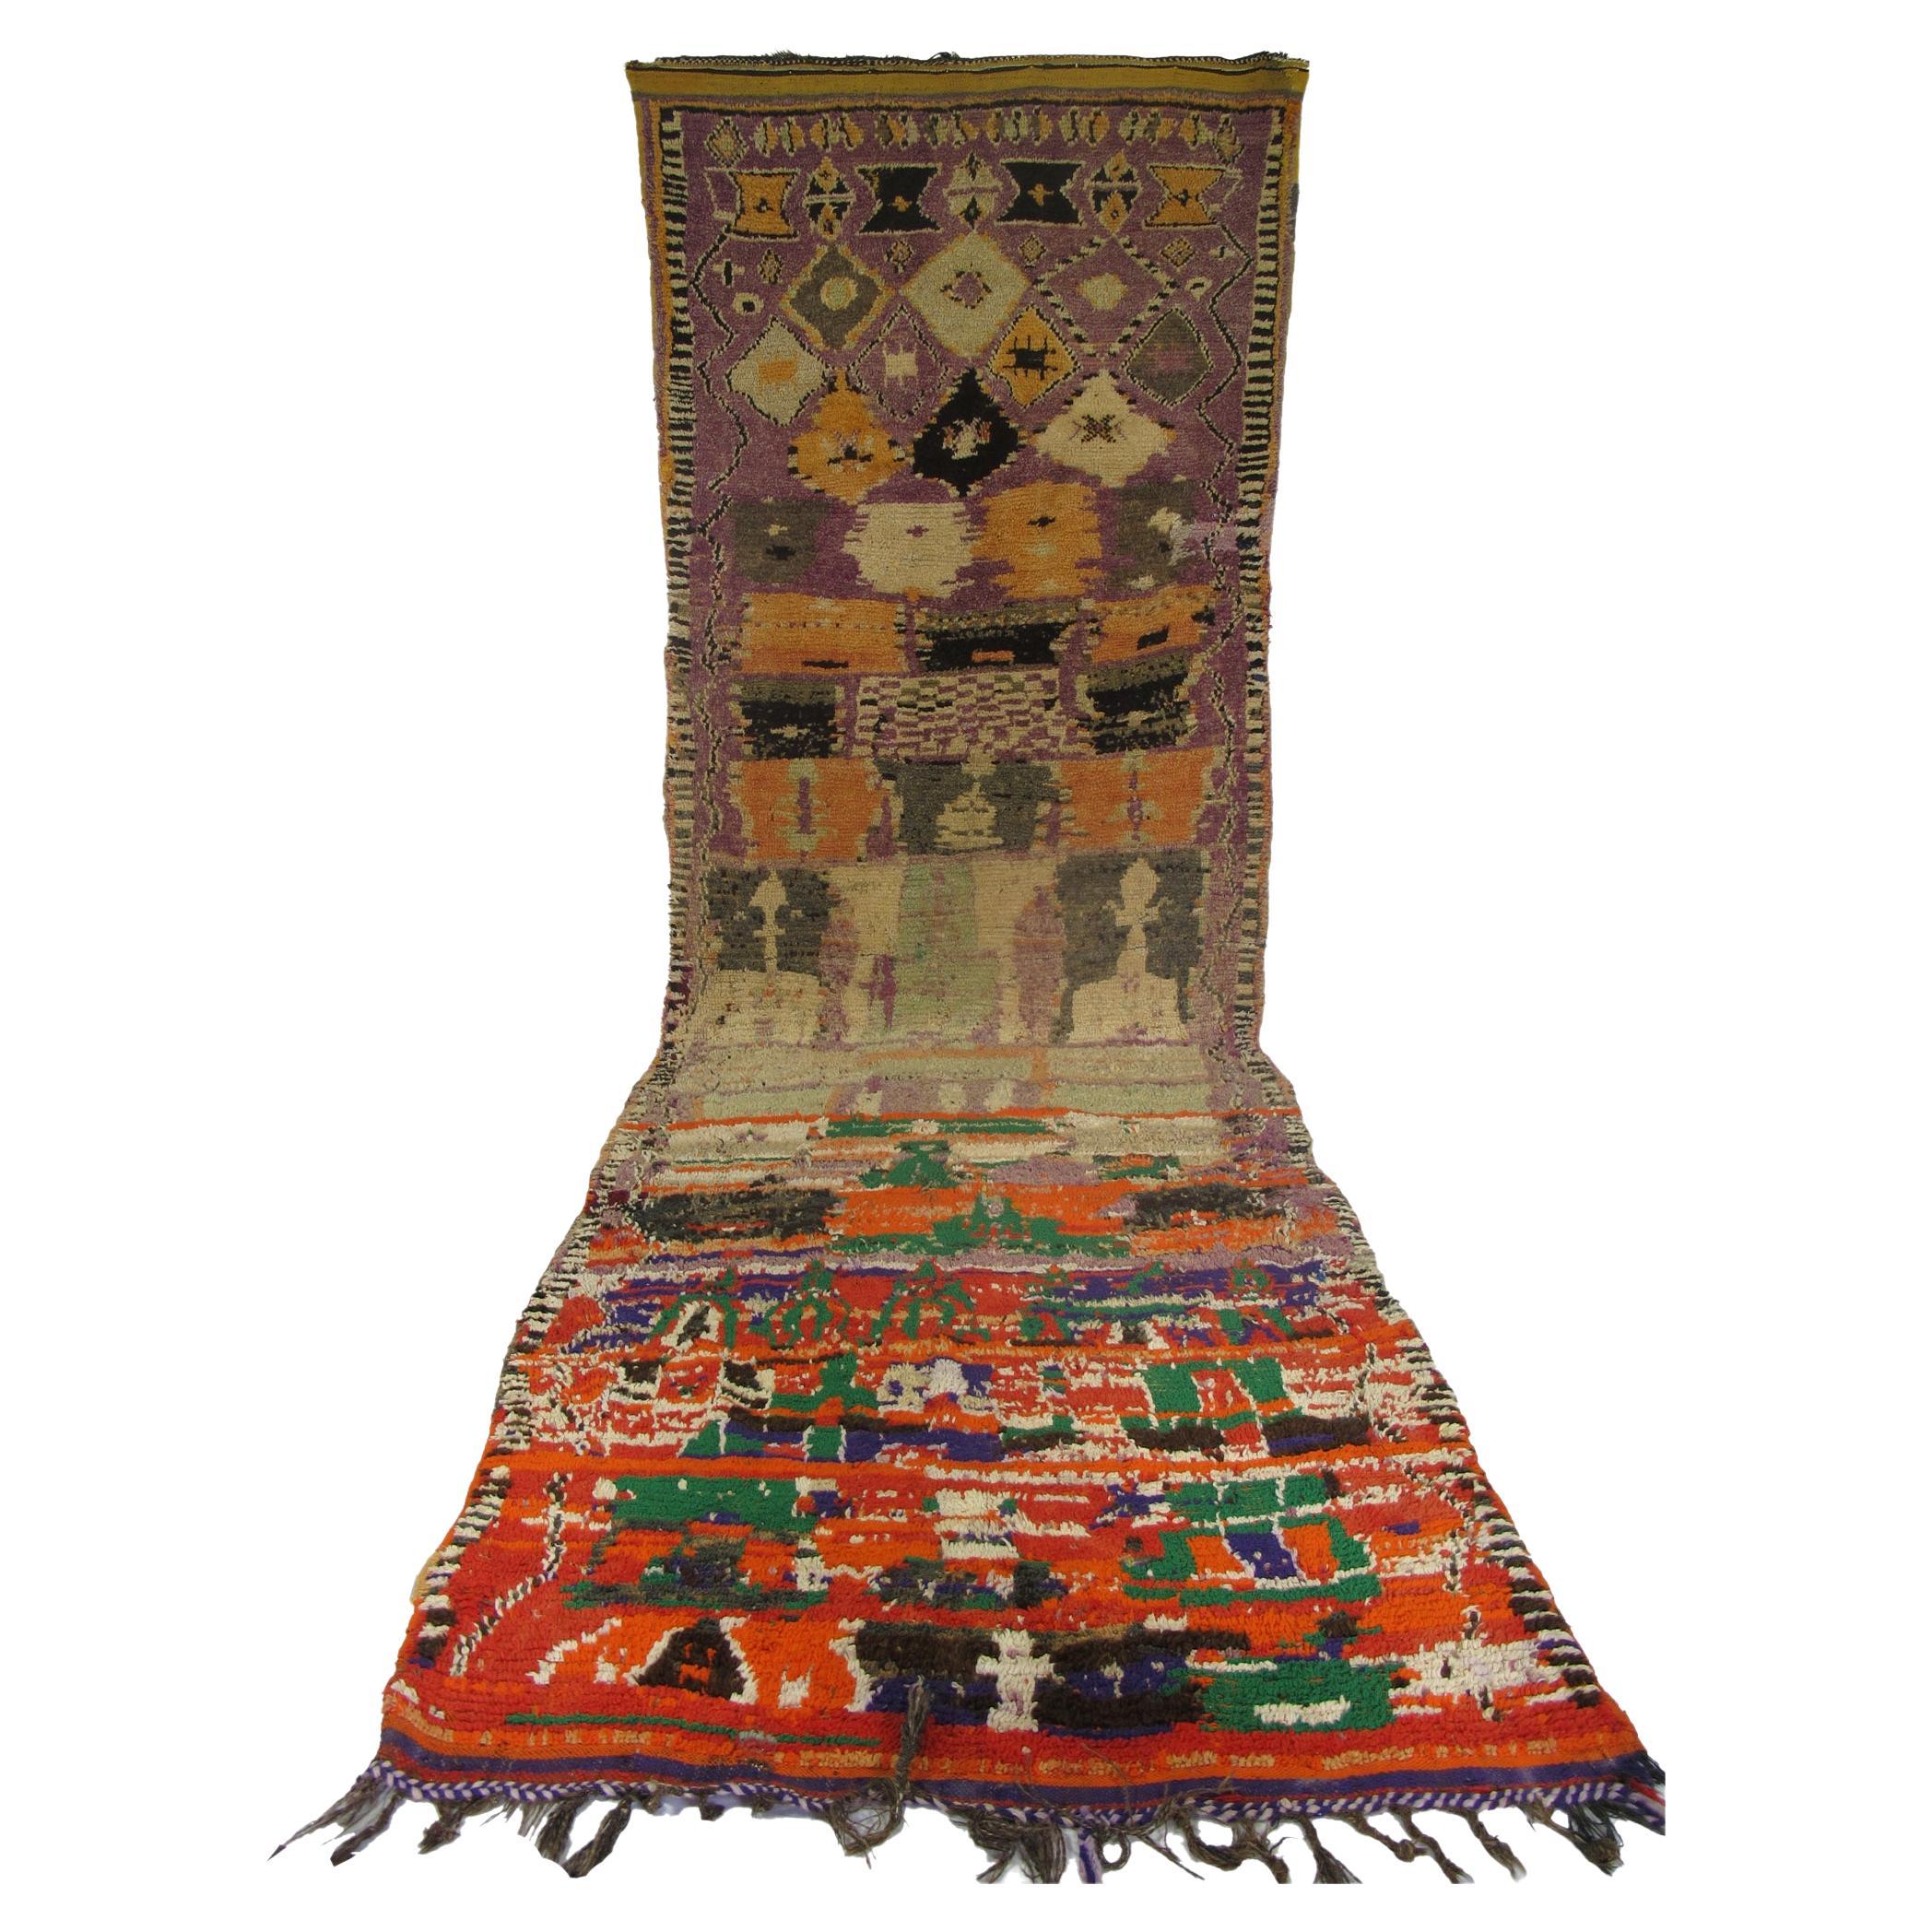 Antique Handmade Moroccan Carpet, The Warrior 